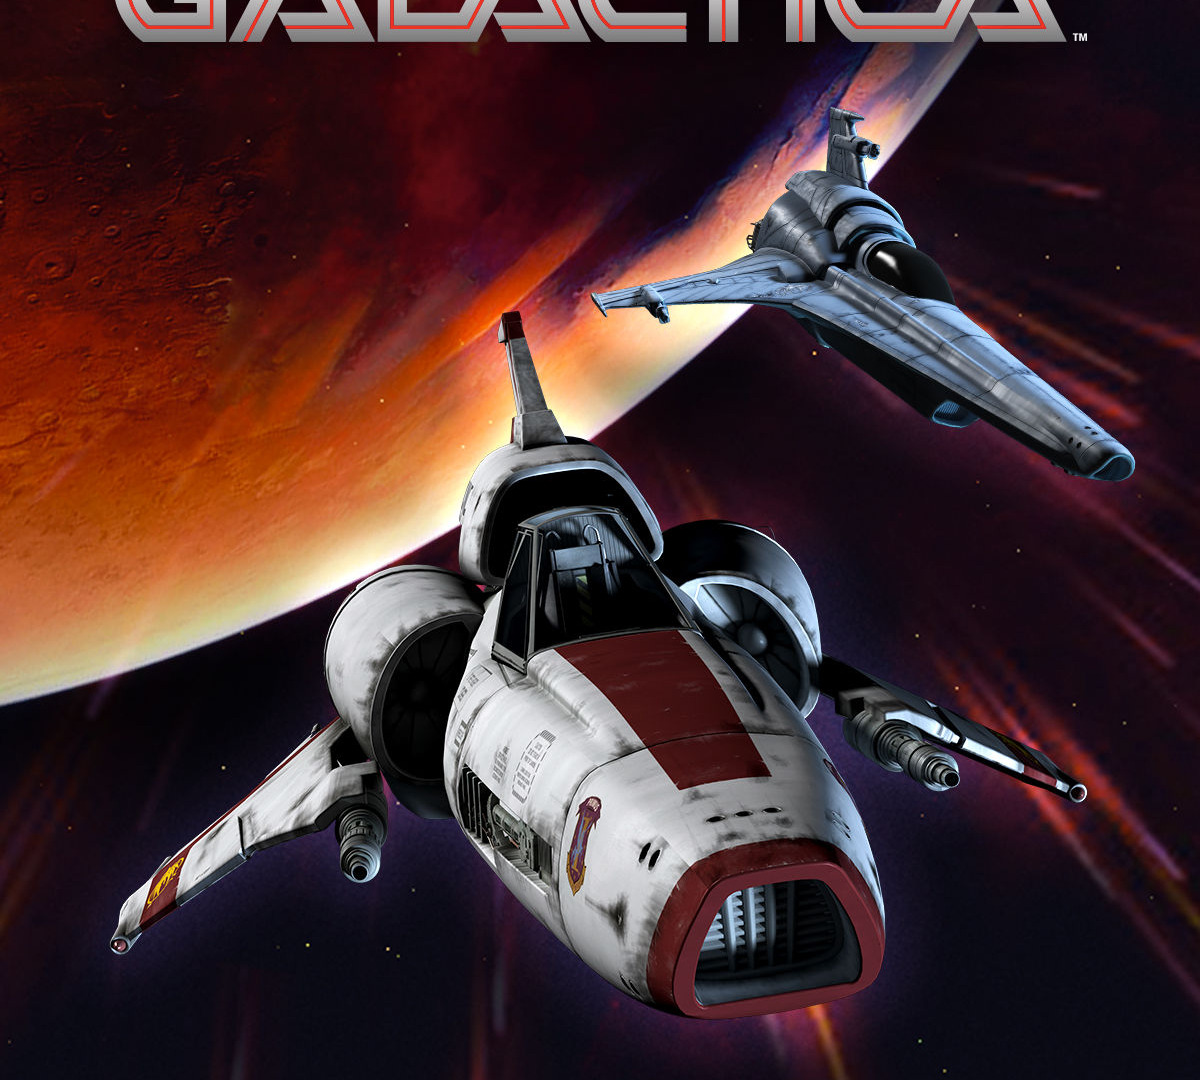 Show Battlestar Galactica